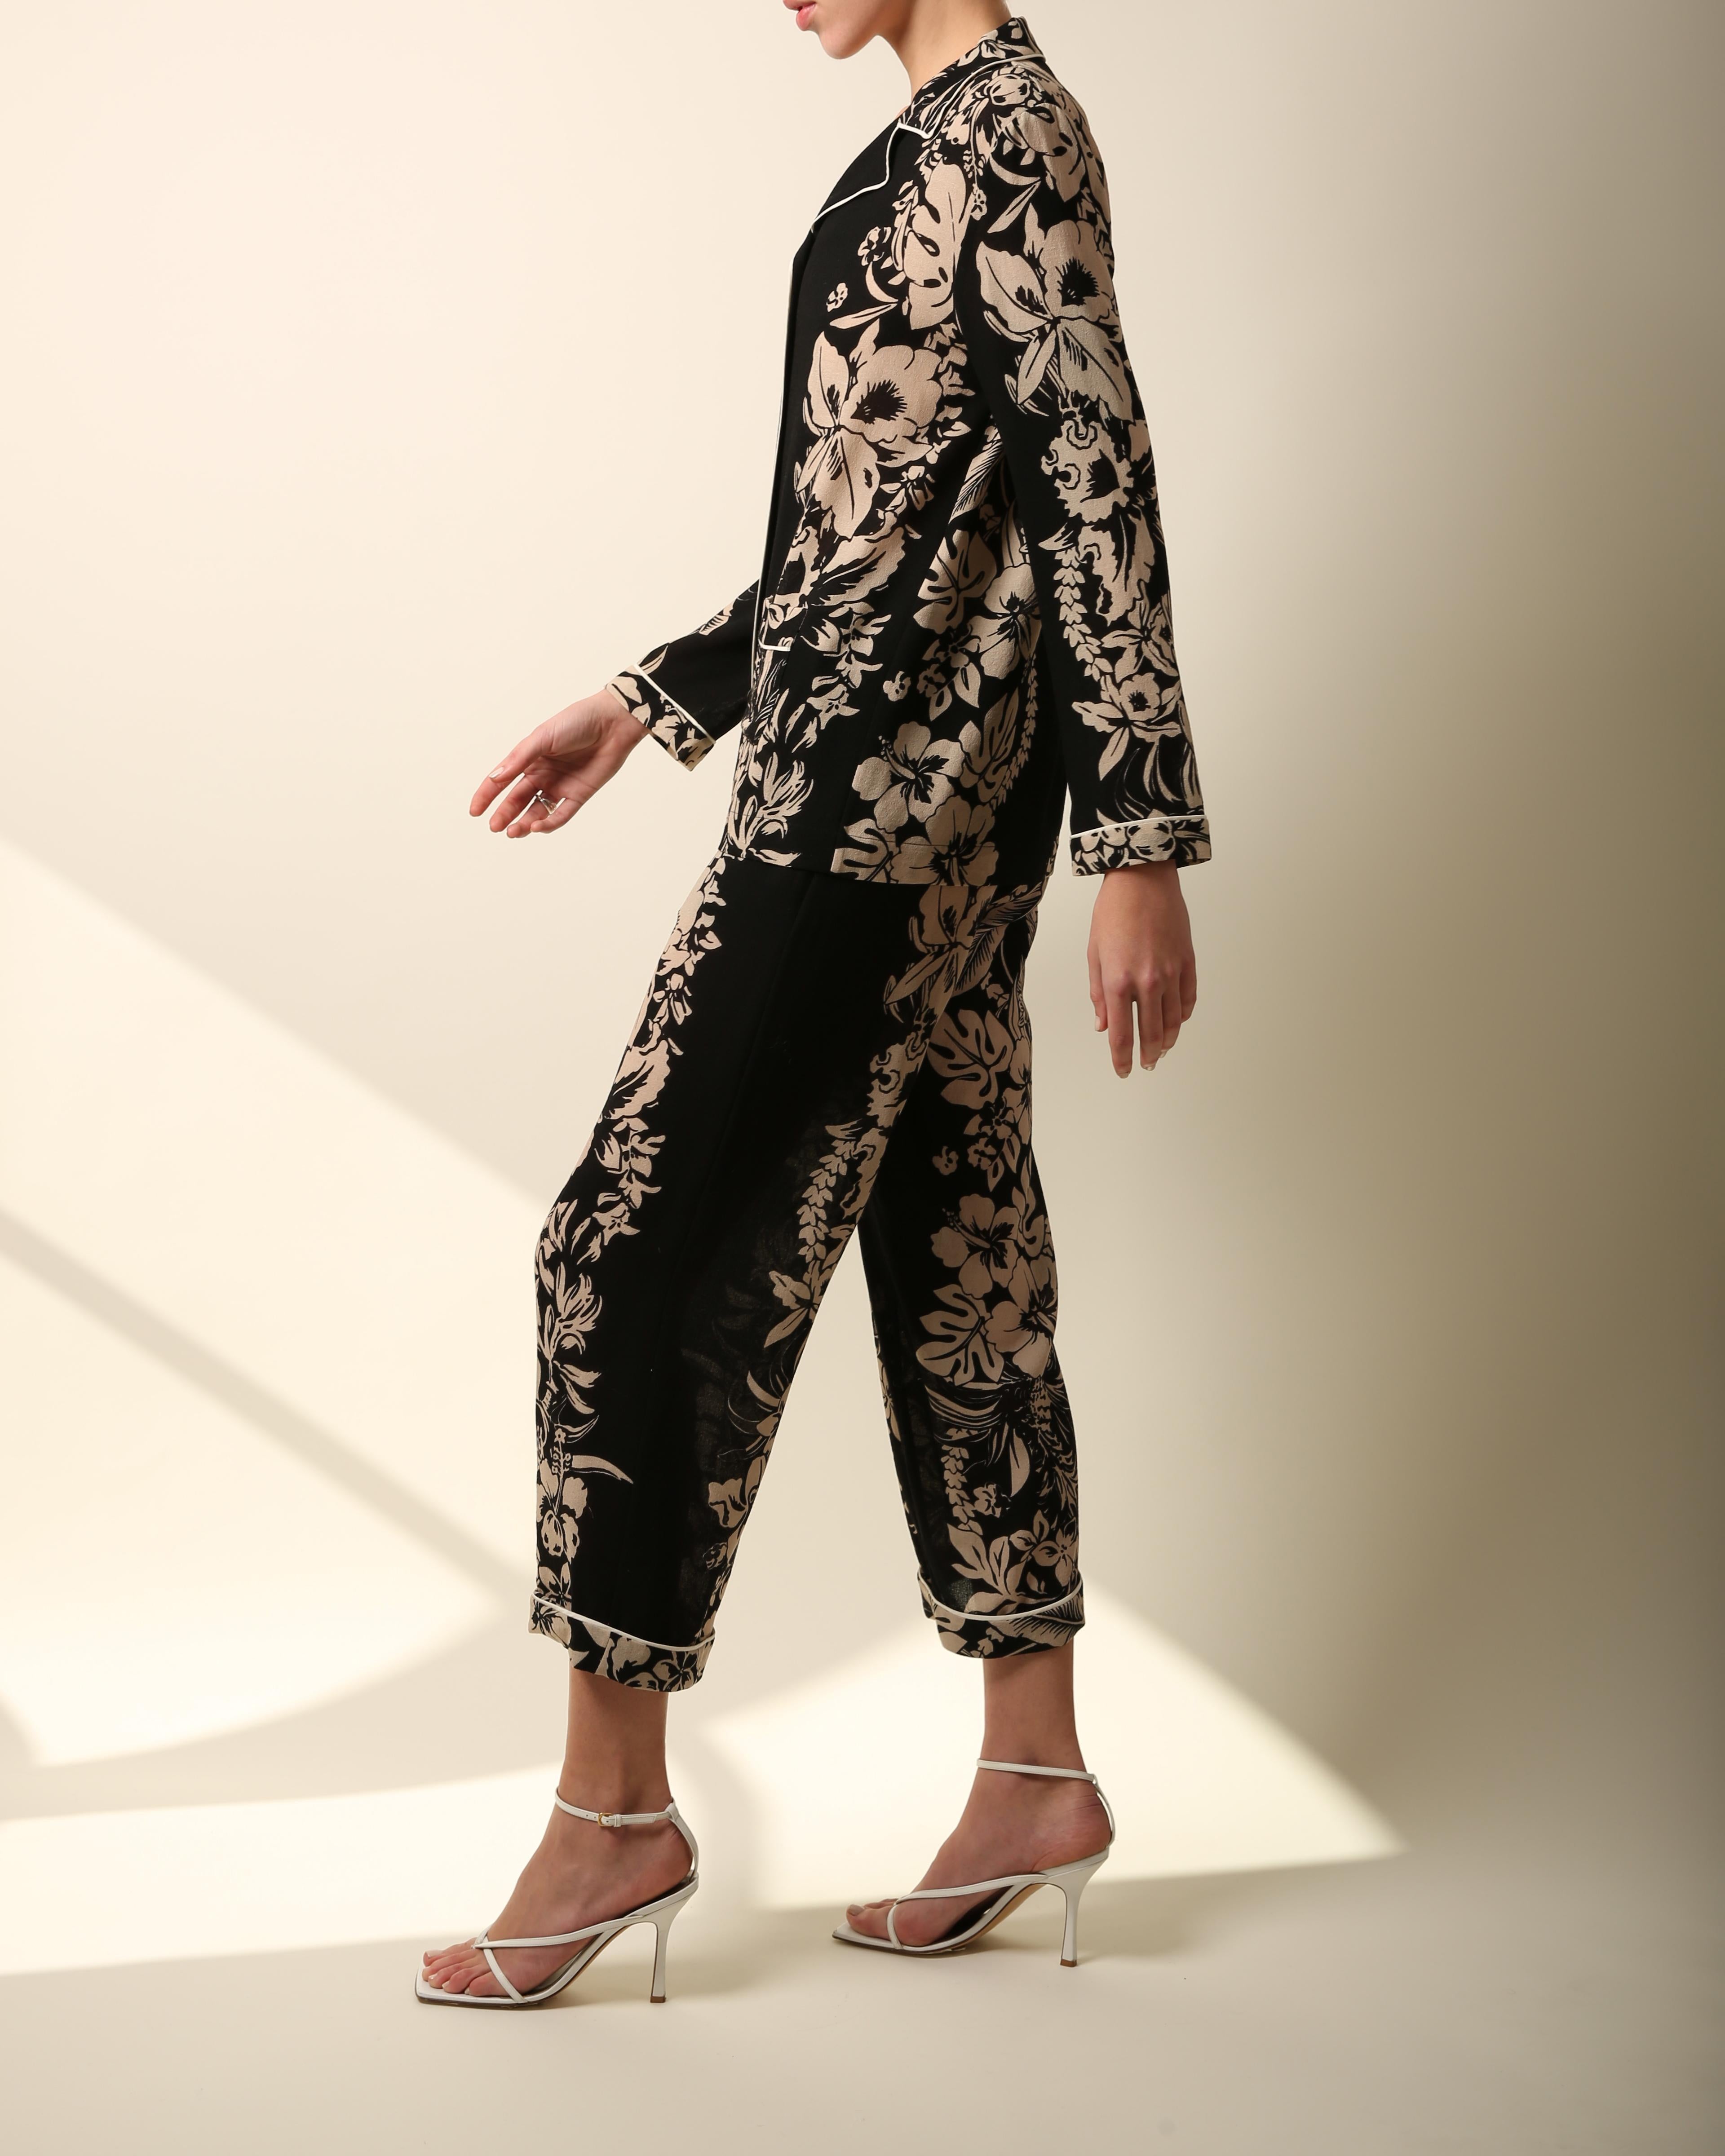 Valentino pyjama style black nude floral print blouse wide dress pants jumpsuit 4